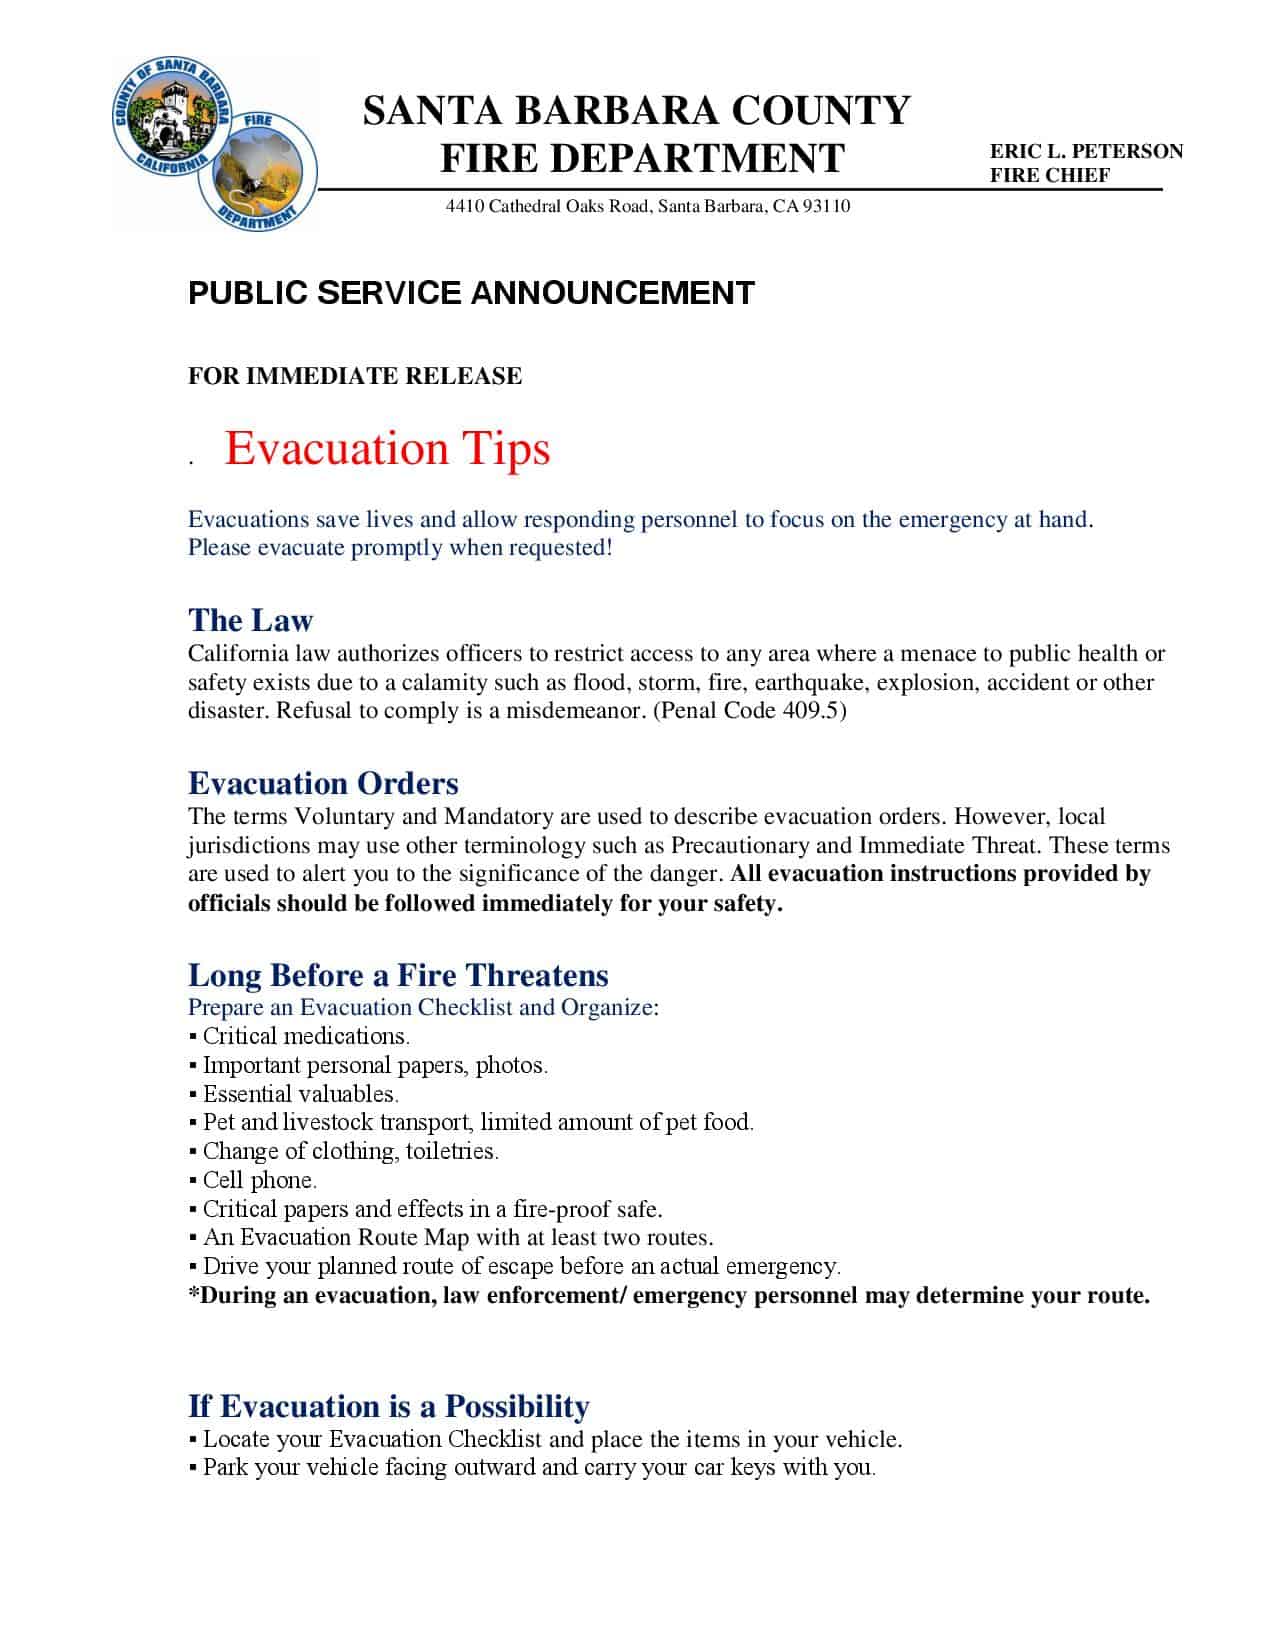 Evacuation Tips